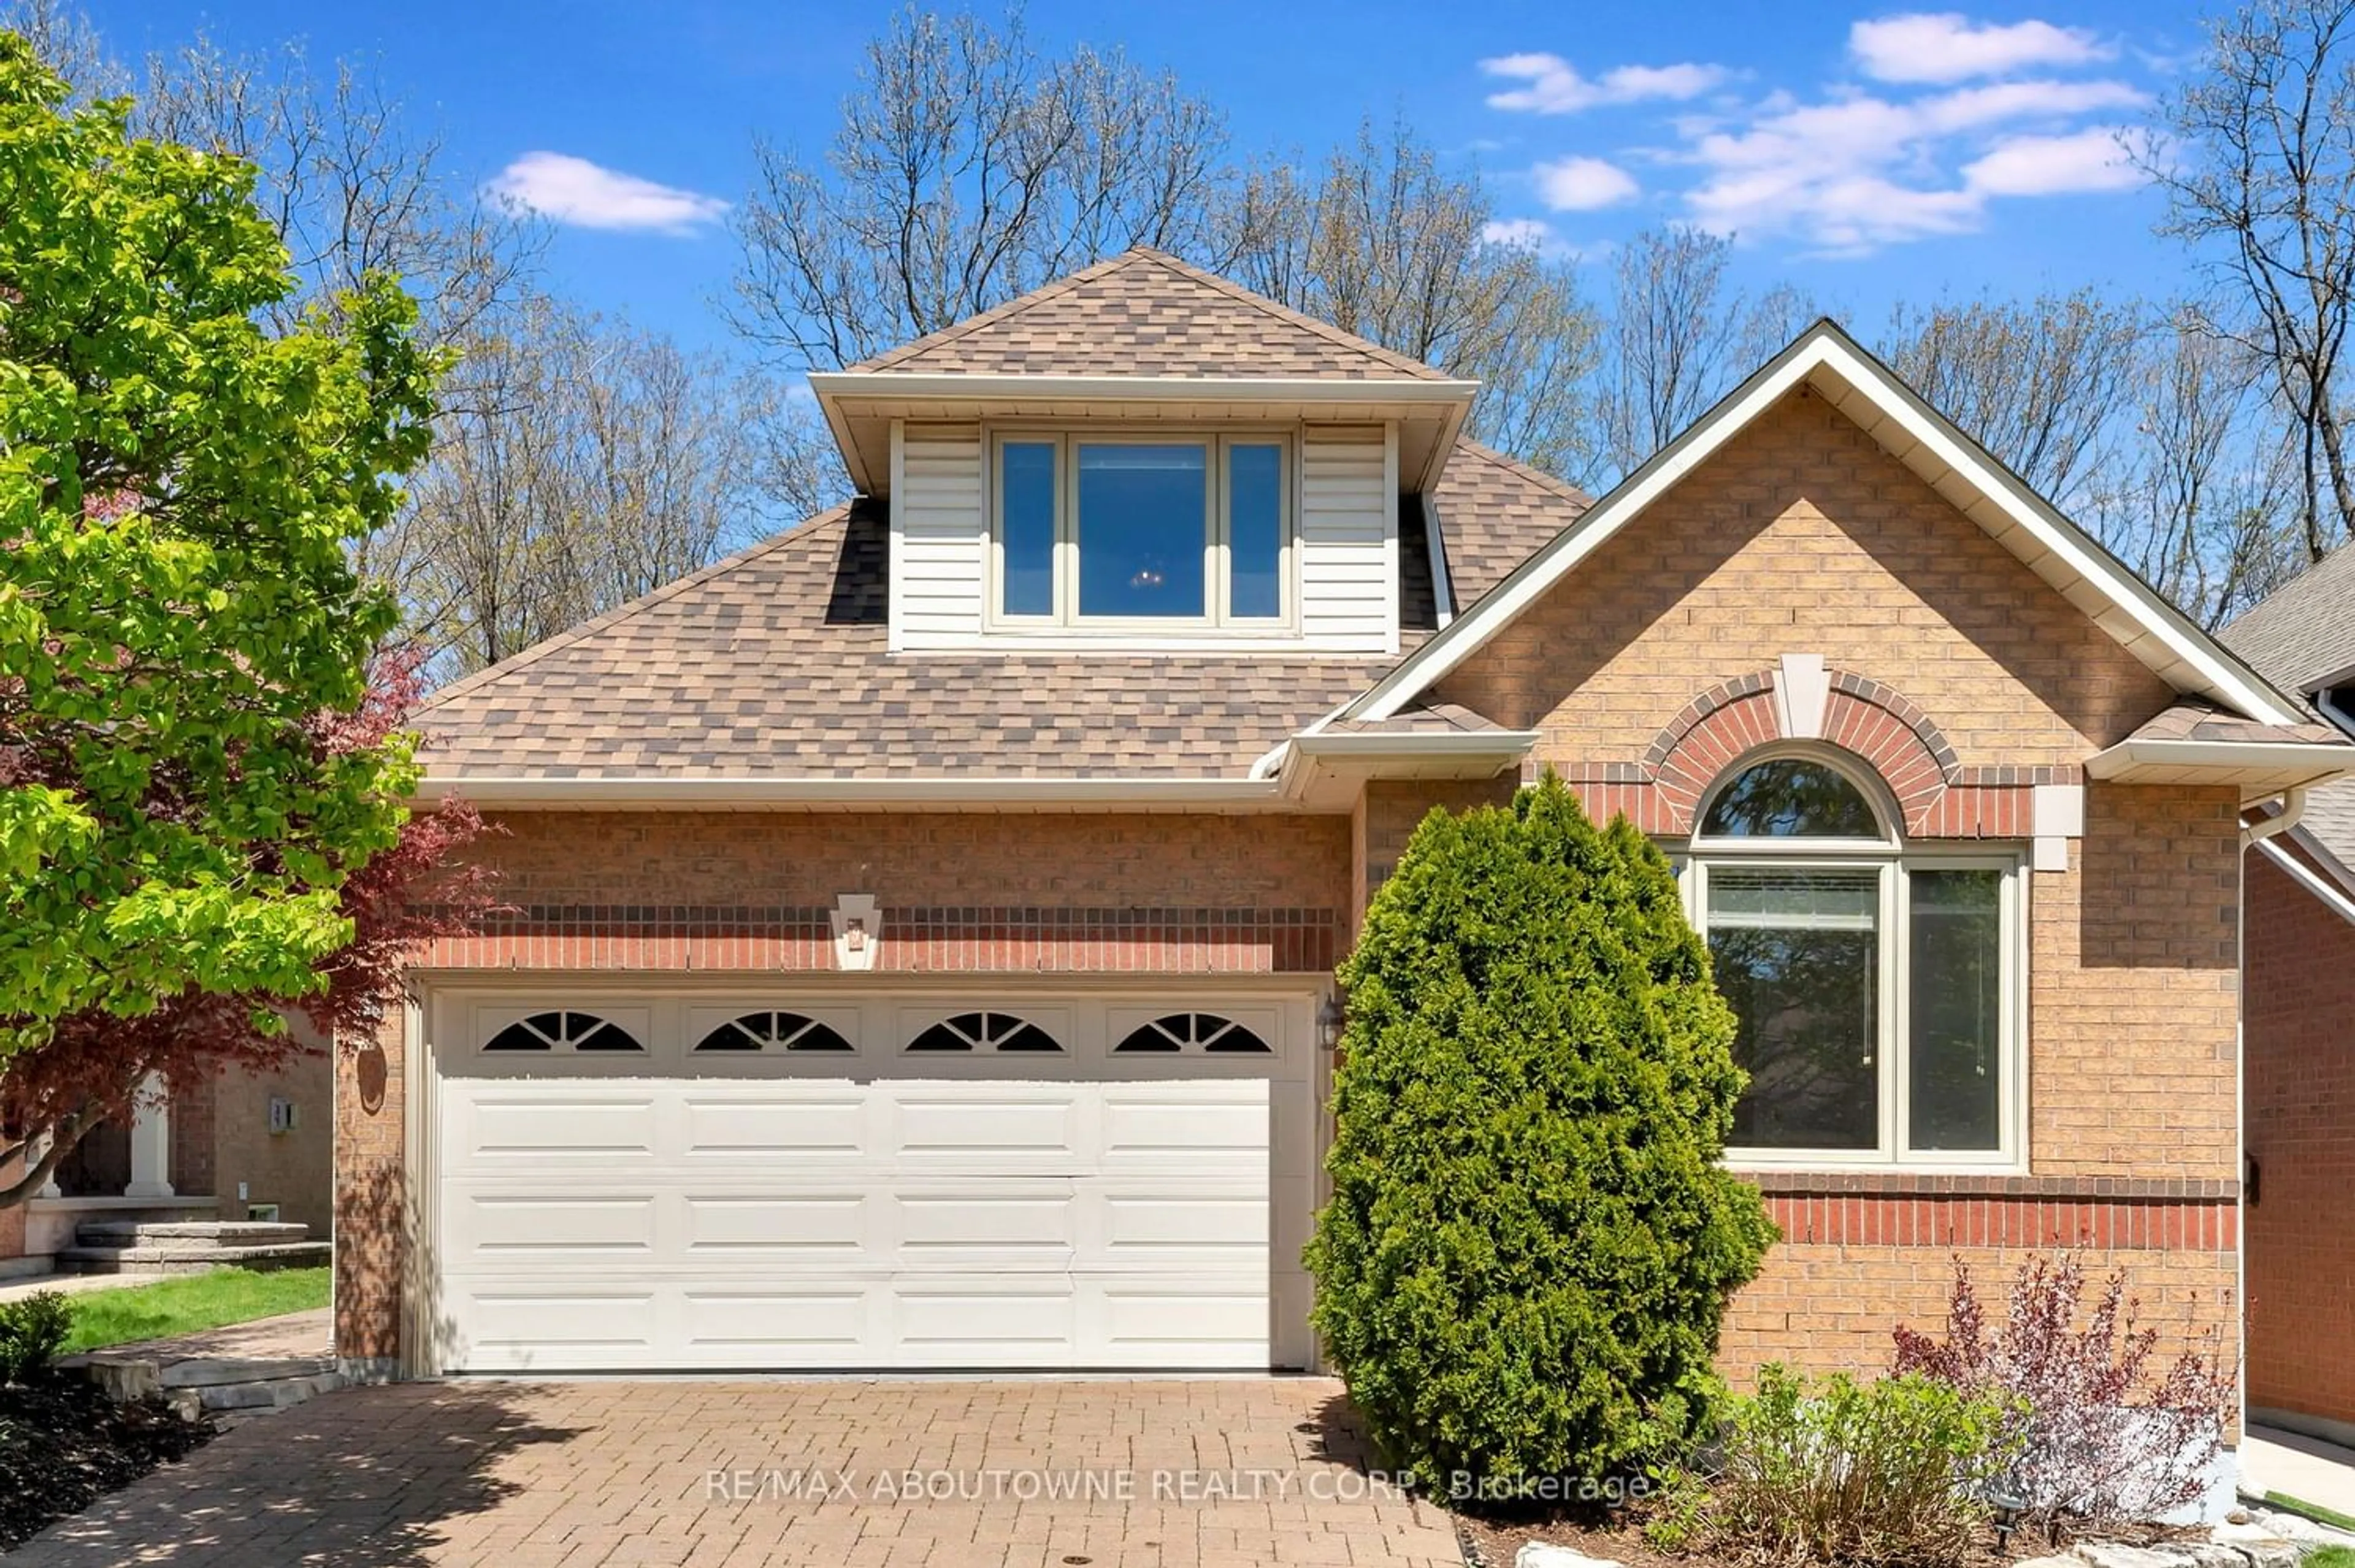 Home with brick exterior material for 1150 Skyview Dr #9, Burlington Ontario L7P 4X5